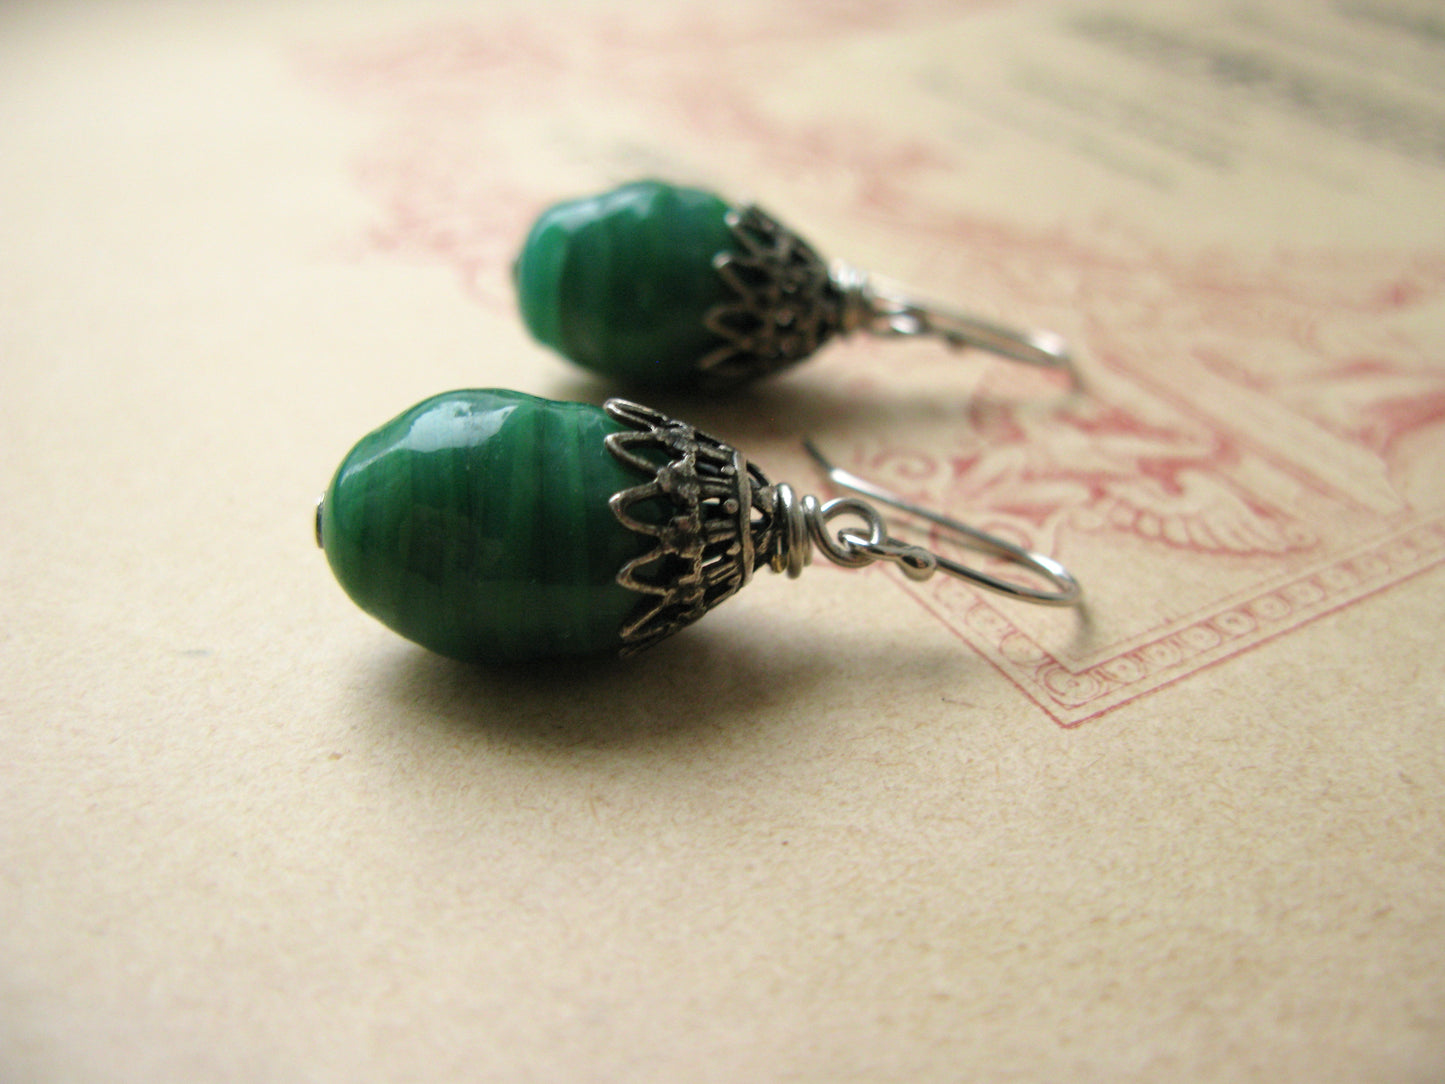 Étoile Verte earrings in silver